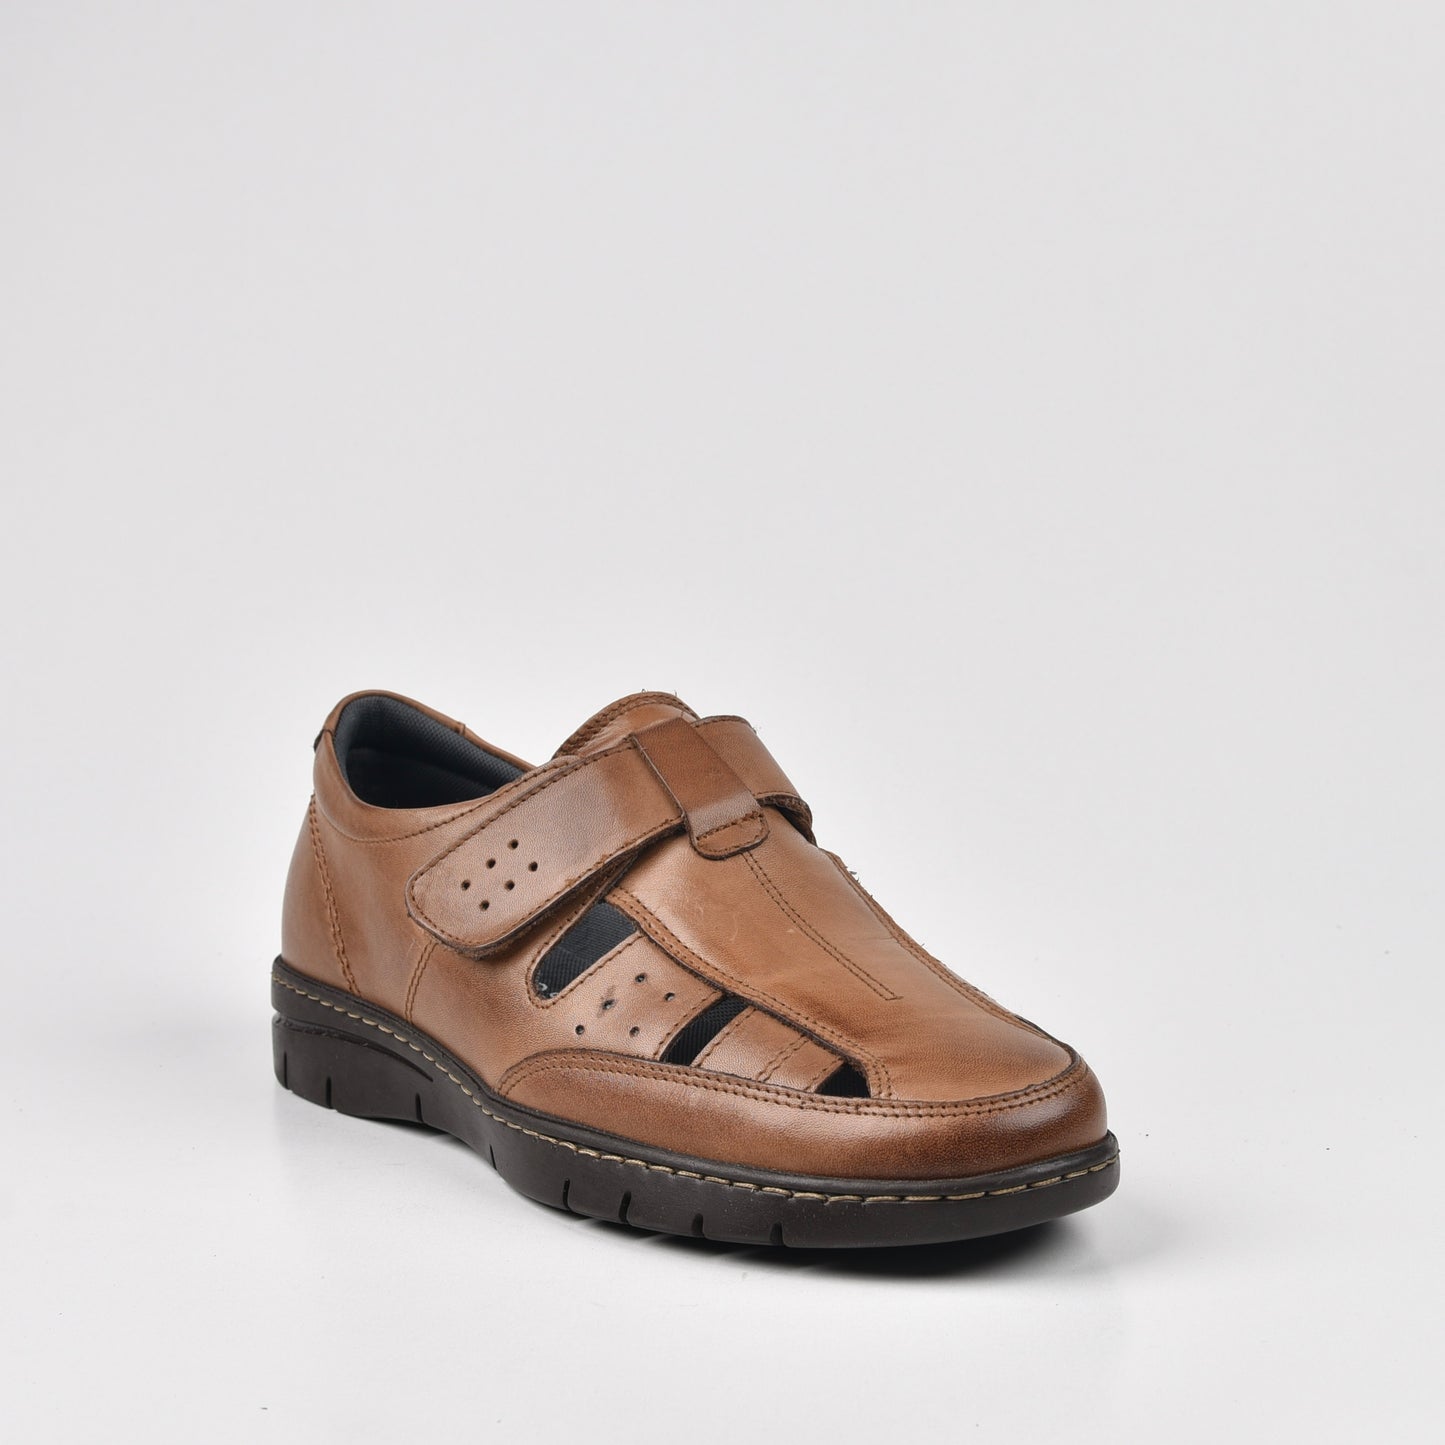 Pitillos Spanish sandals for men in Camel